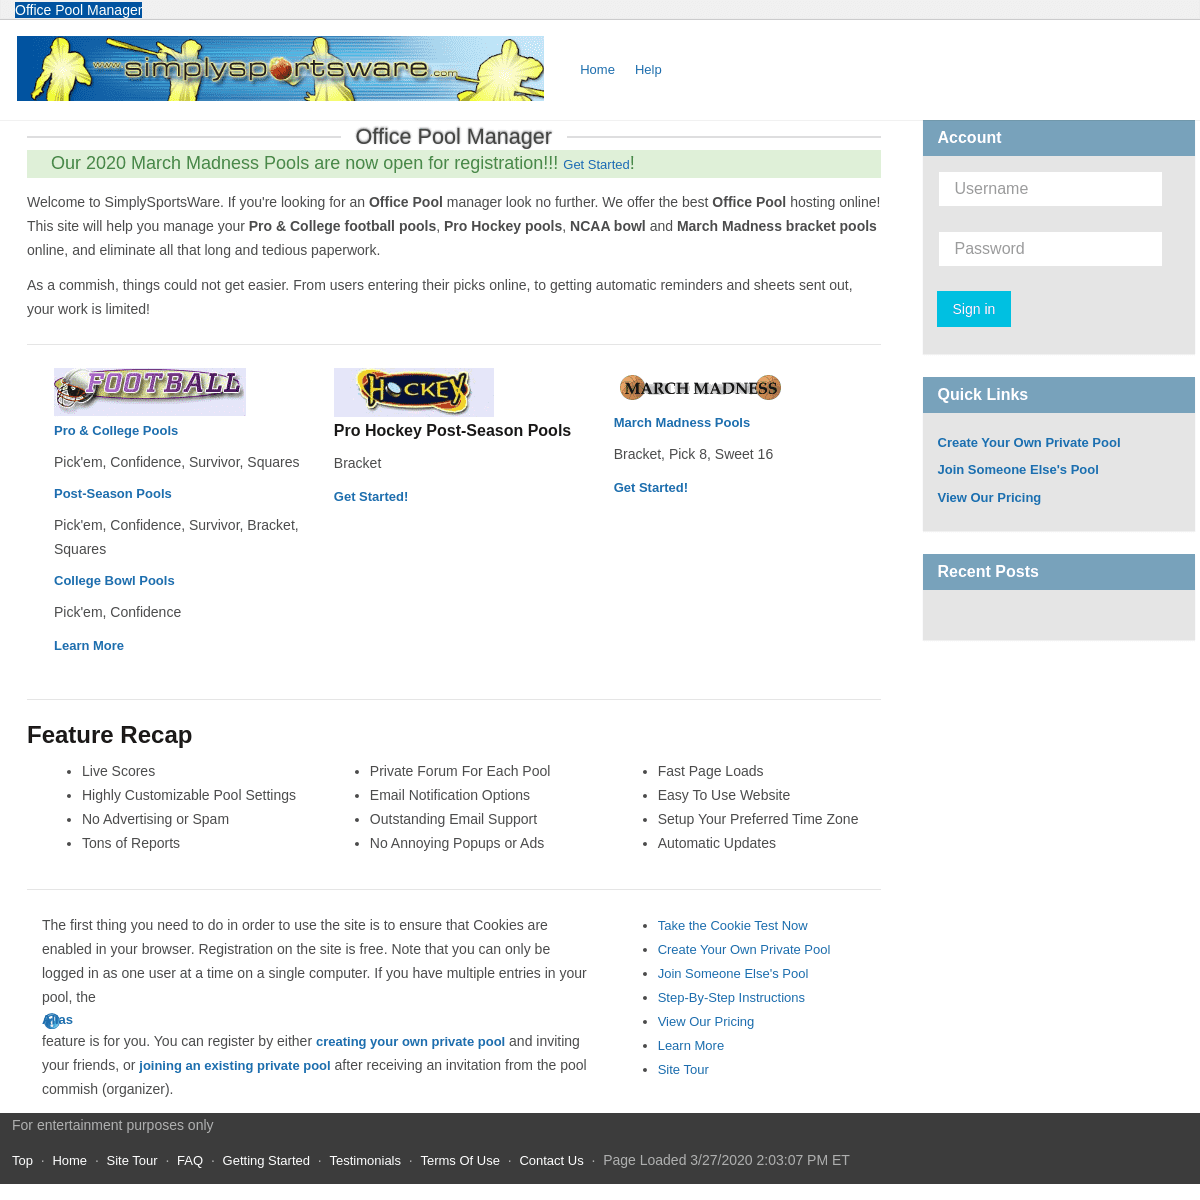 A complete backup of simplysportsware.com